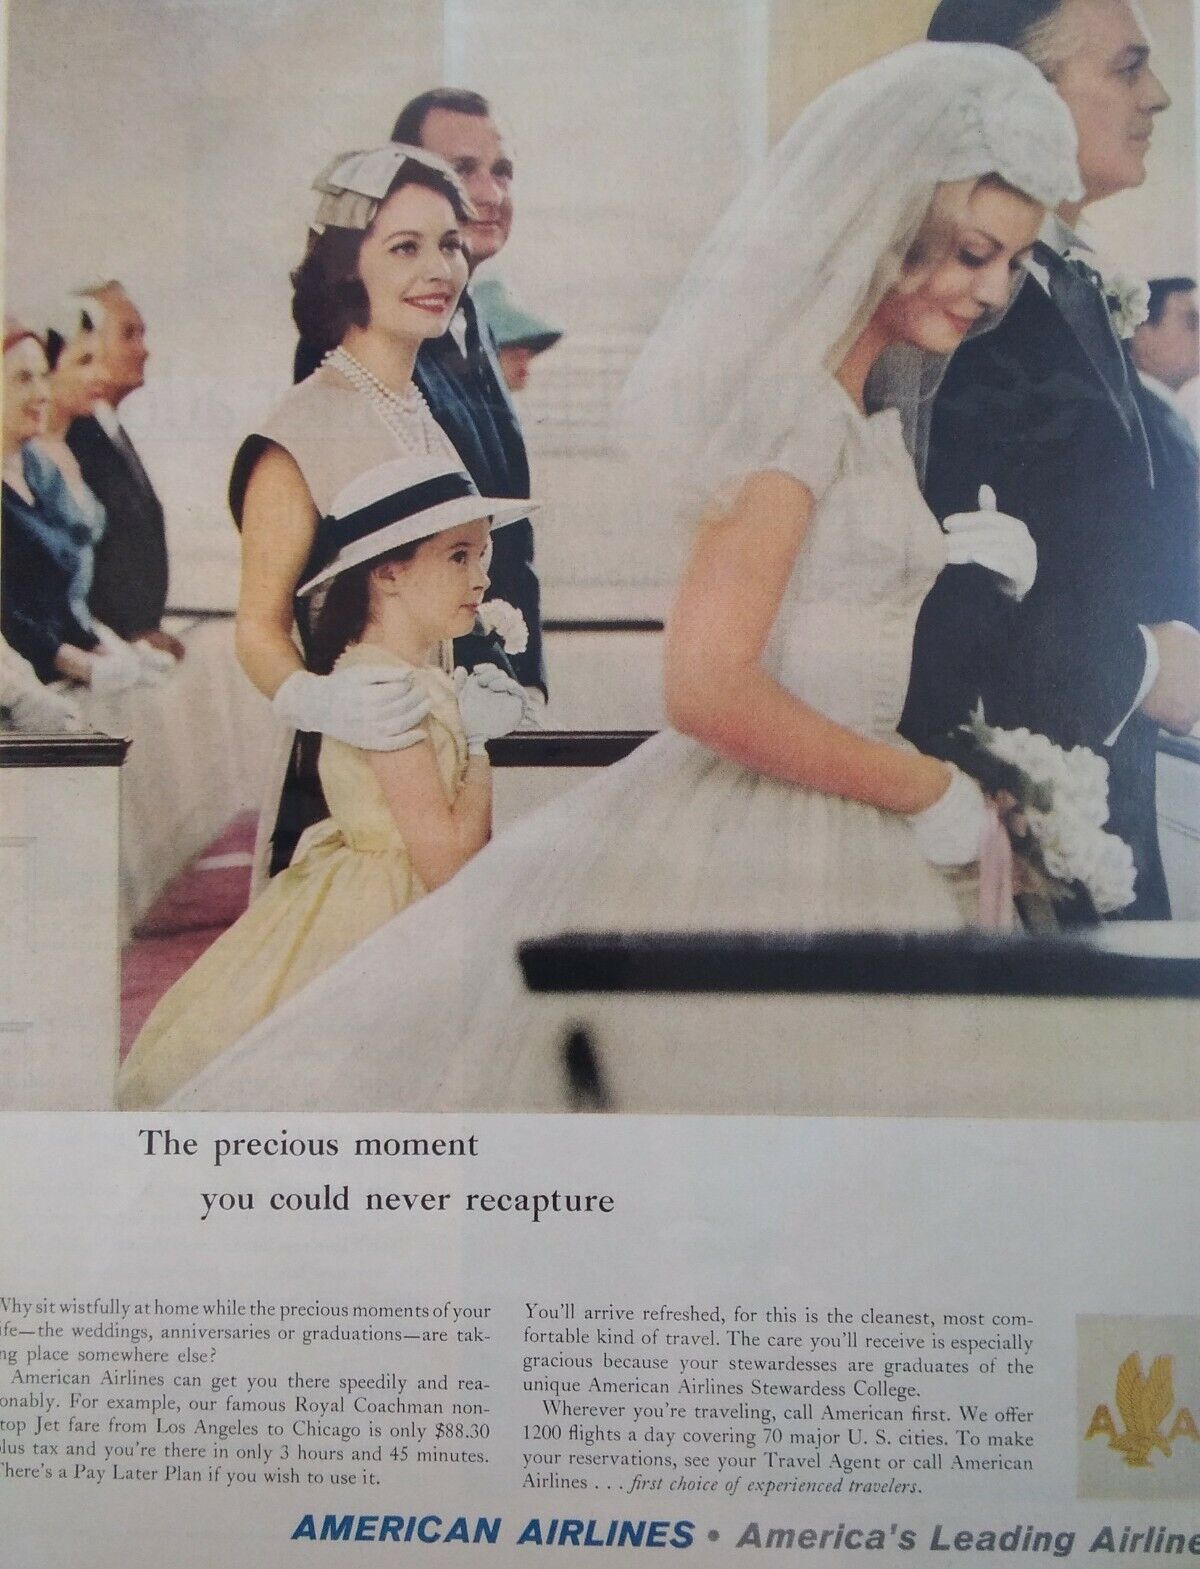 American Airlines Print Ad Original Vintage 1960s Wedding Bride Fashion Pretty 